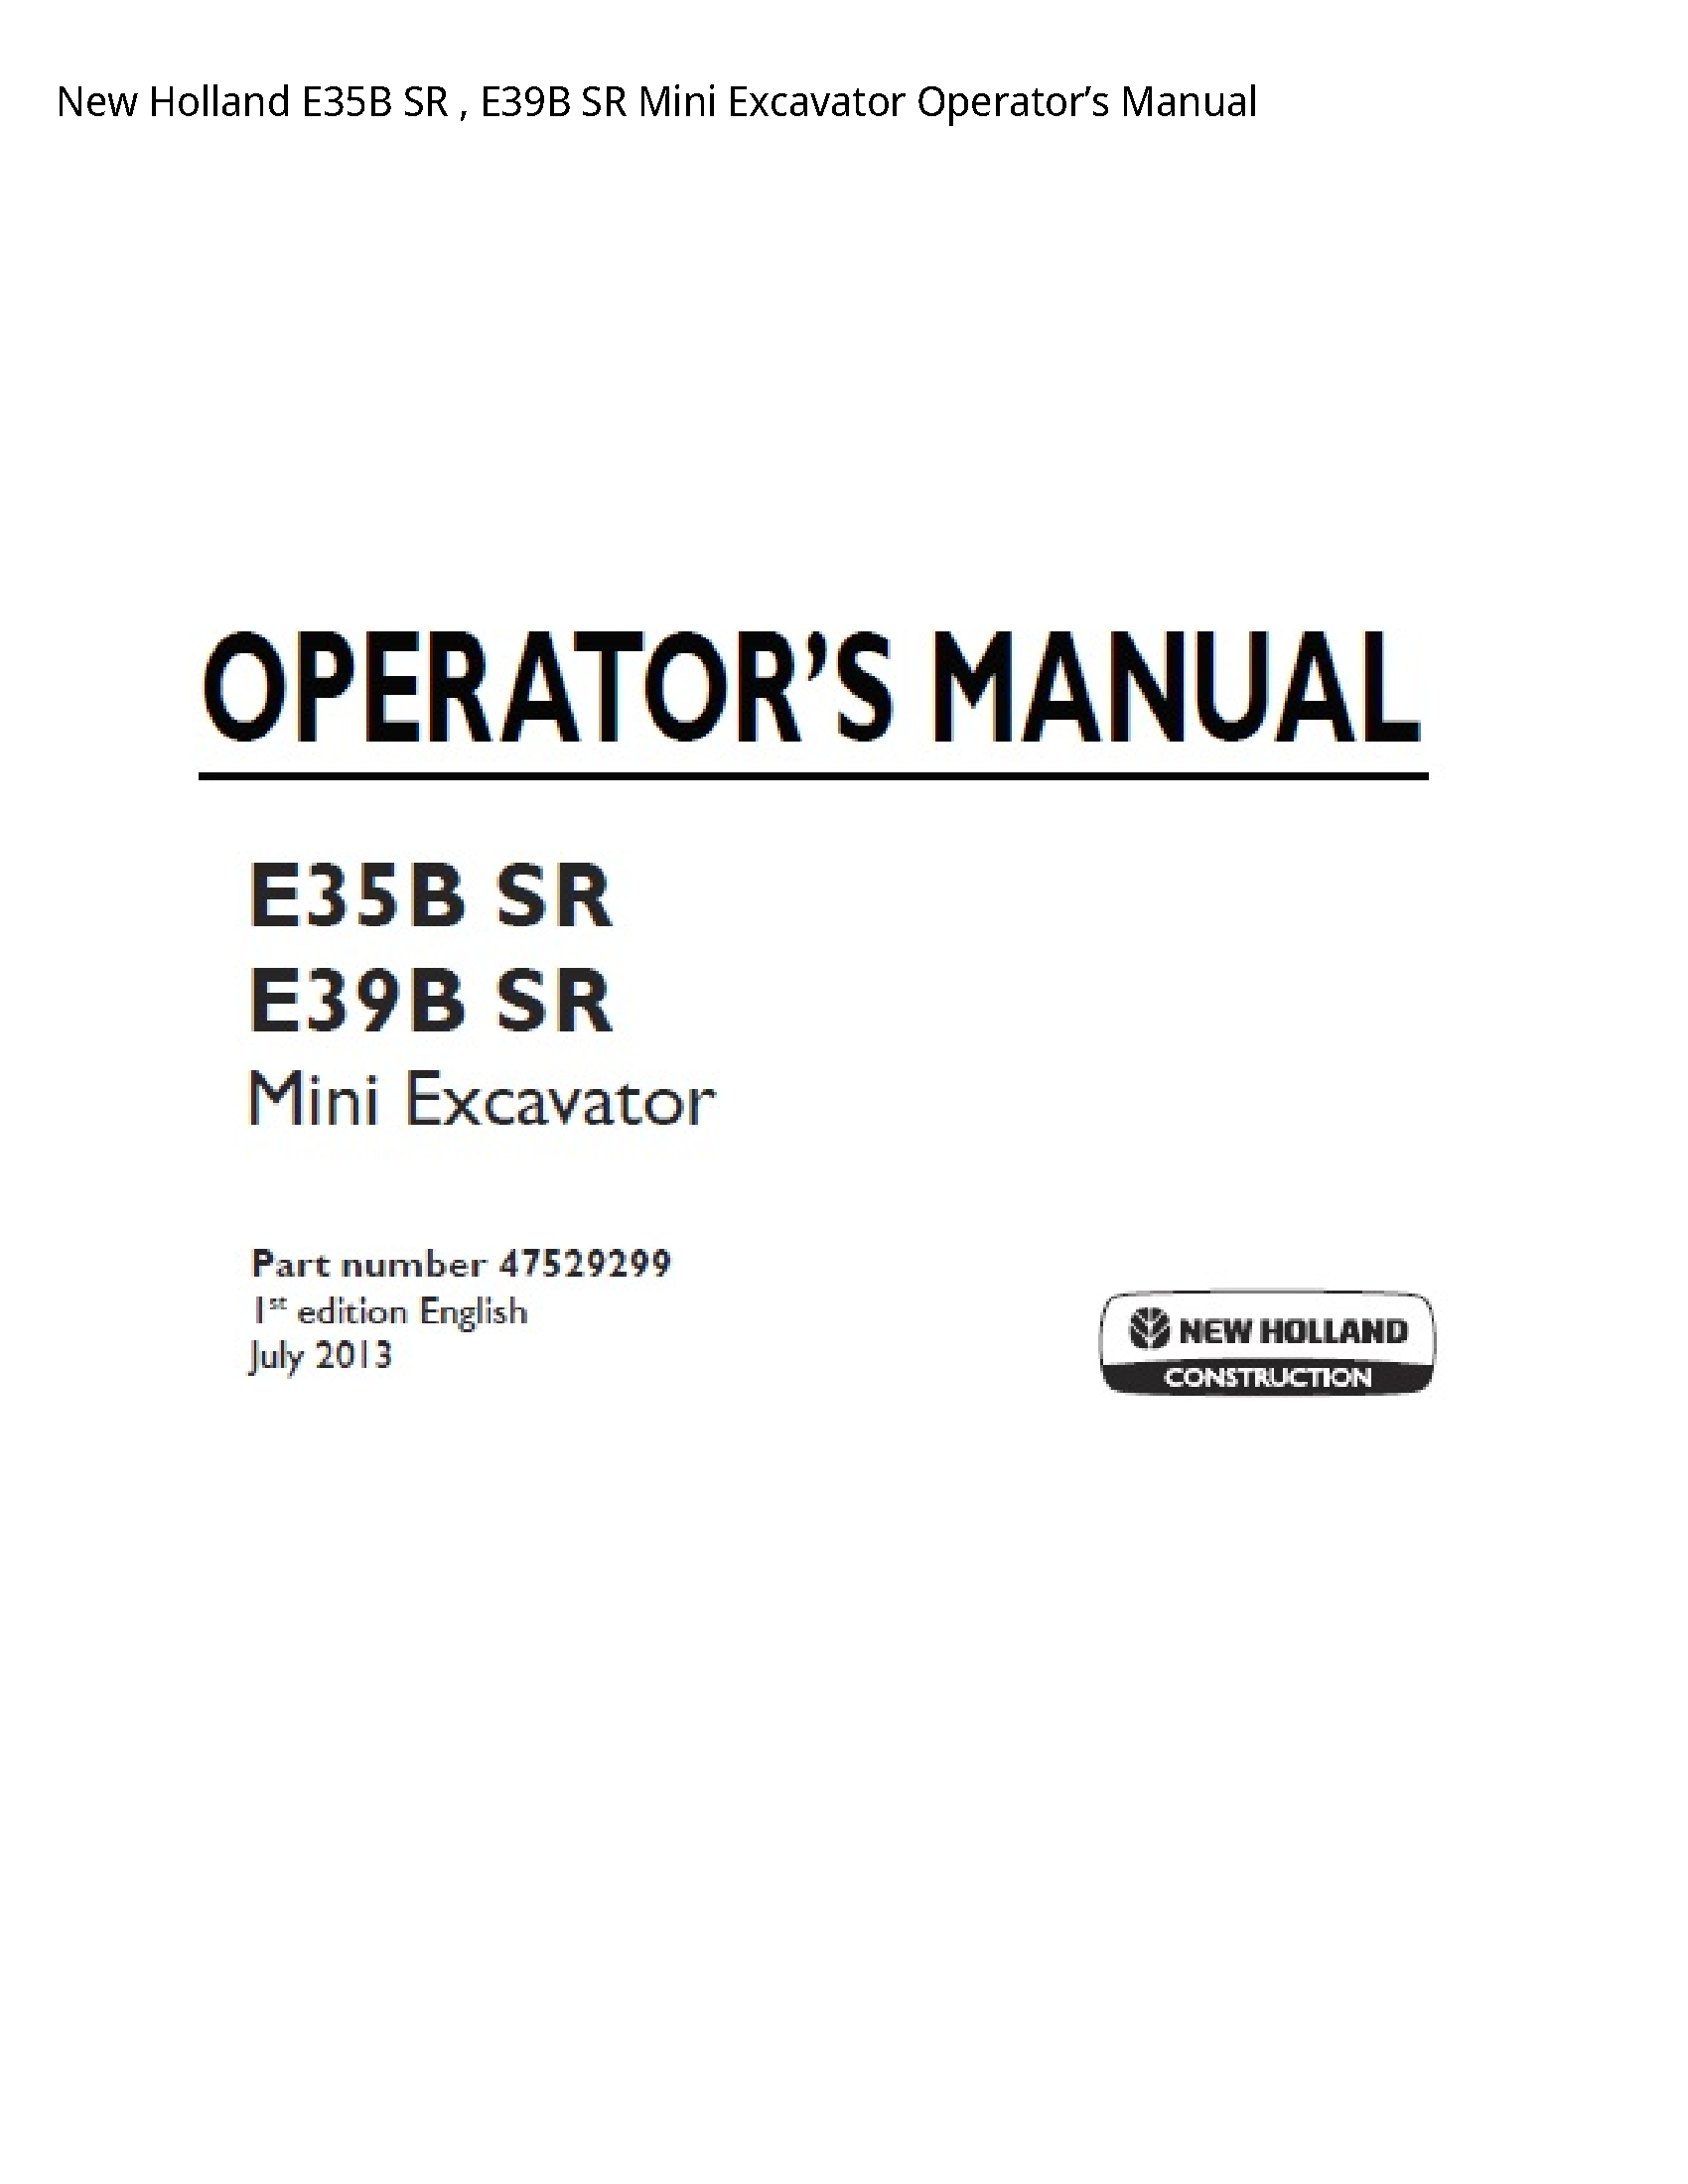 New Holland E35B SR SR Mini Excavator Operator’s manual